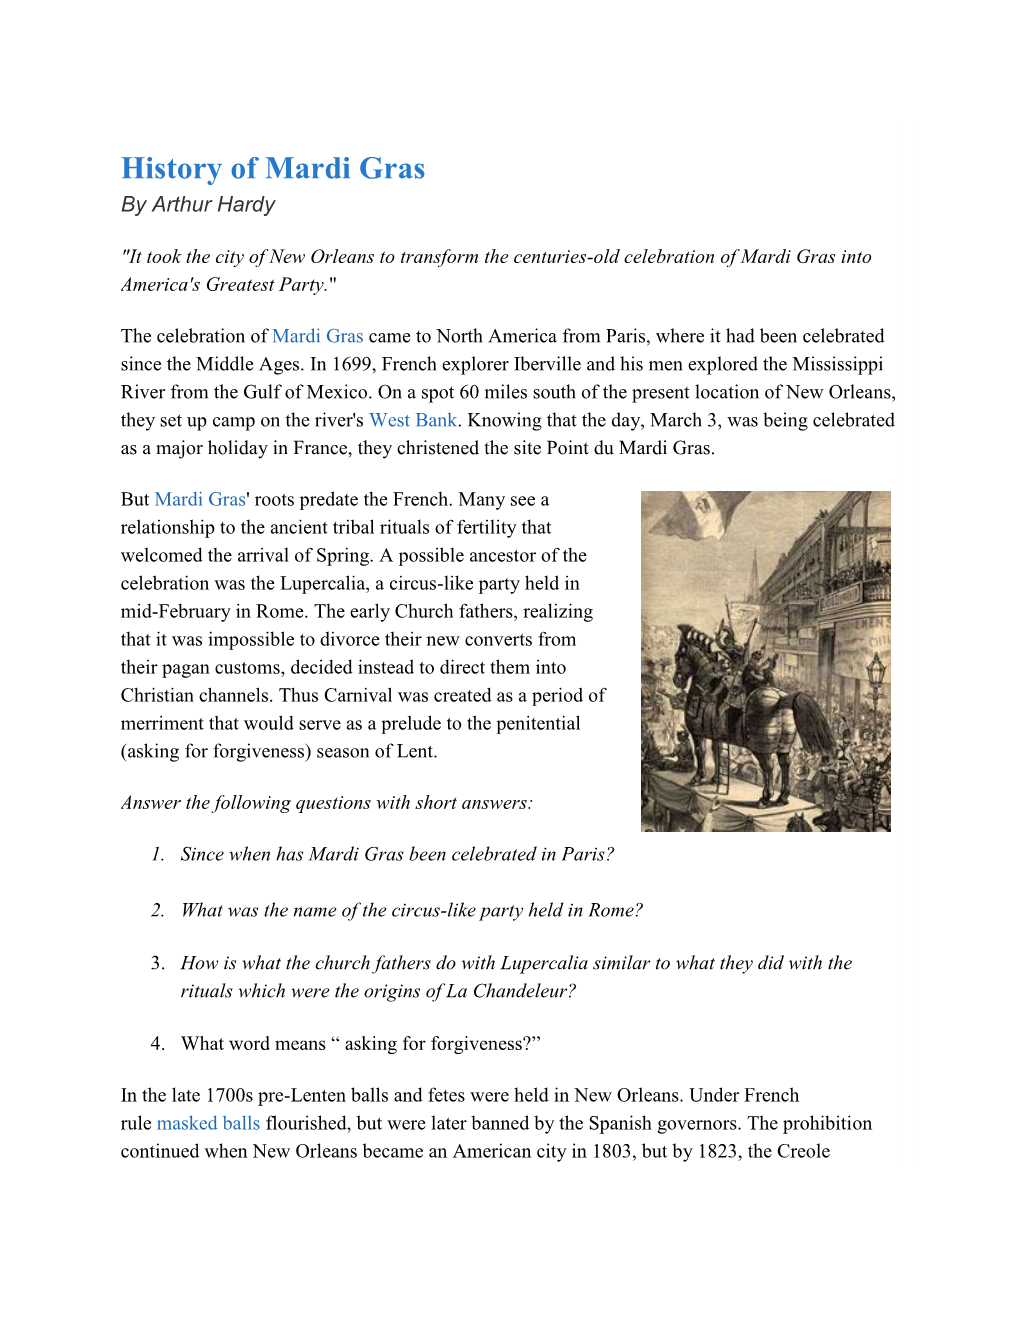 History of Mardi Gras by Arthur Hardy